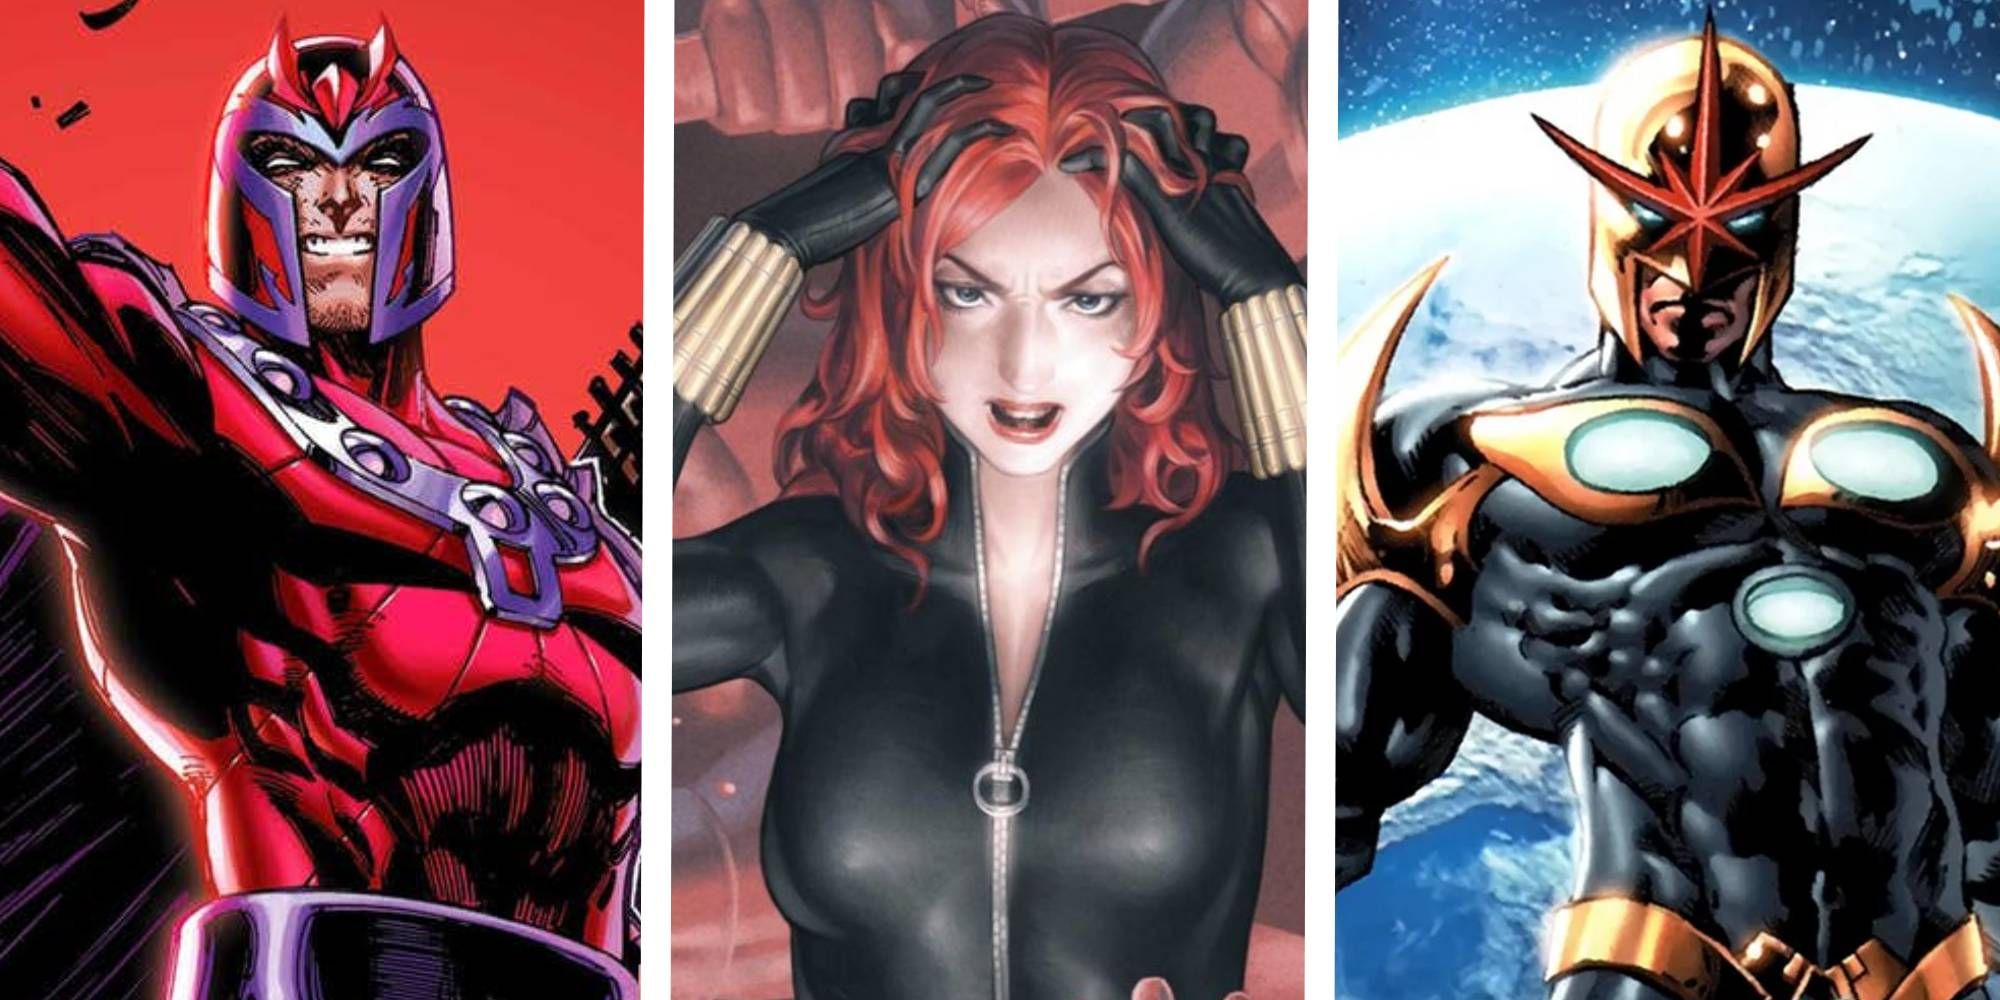 Marvel Comics Universes Beyond Feature Image Magneto, Black Widow, and Nova